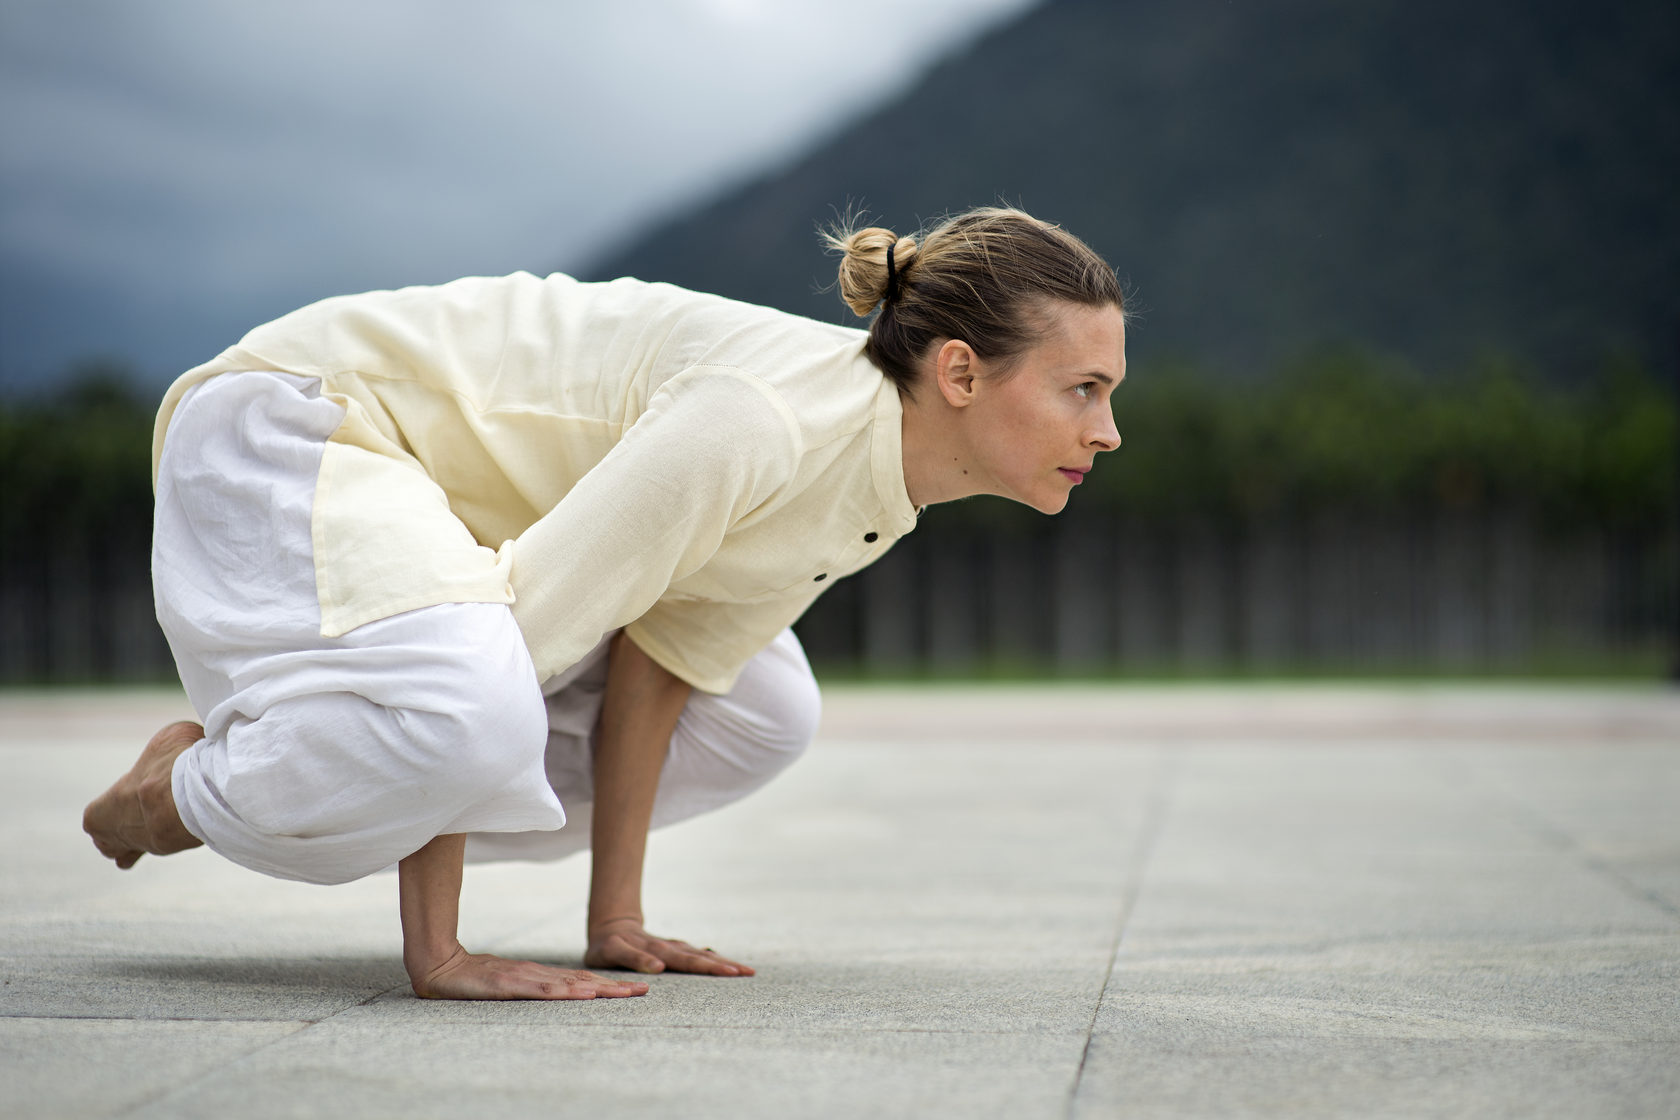 Isha Hatha Yoga: Techniques for holistic wellbeing